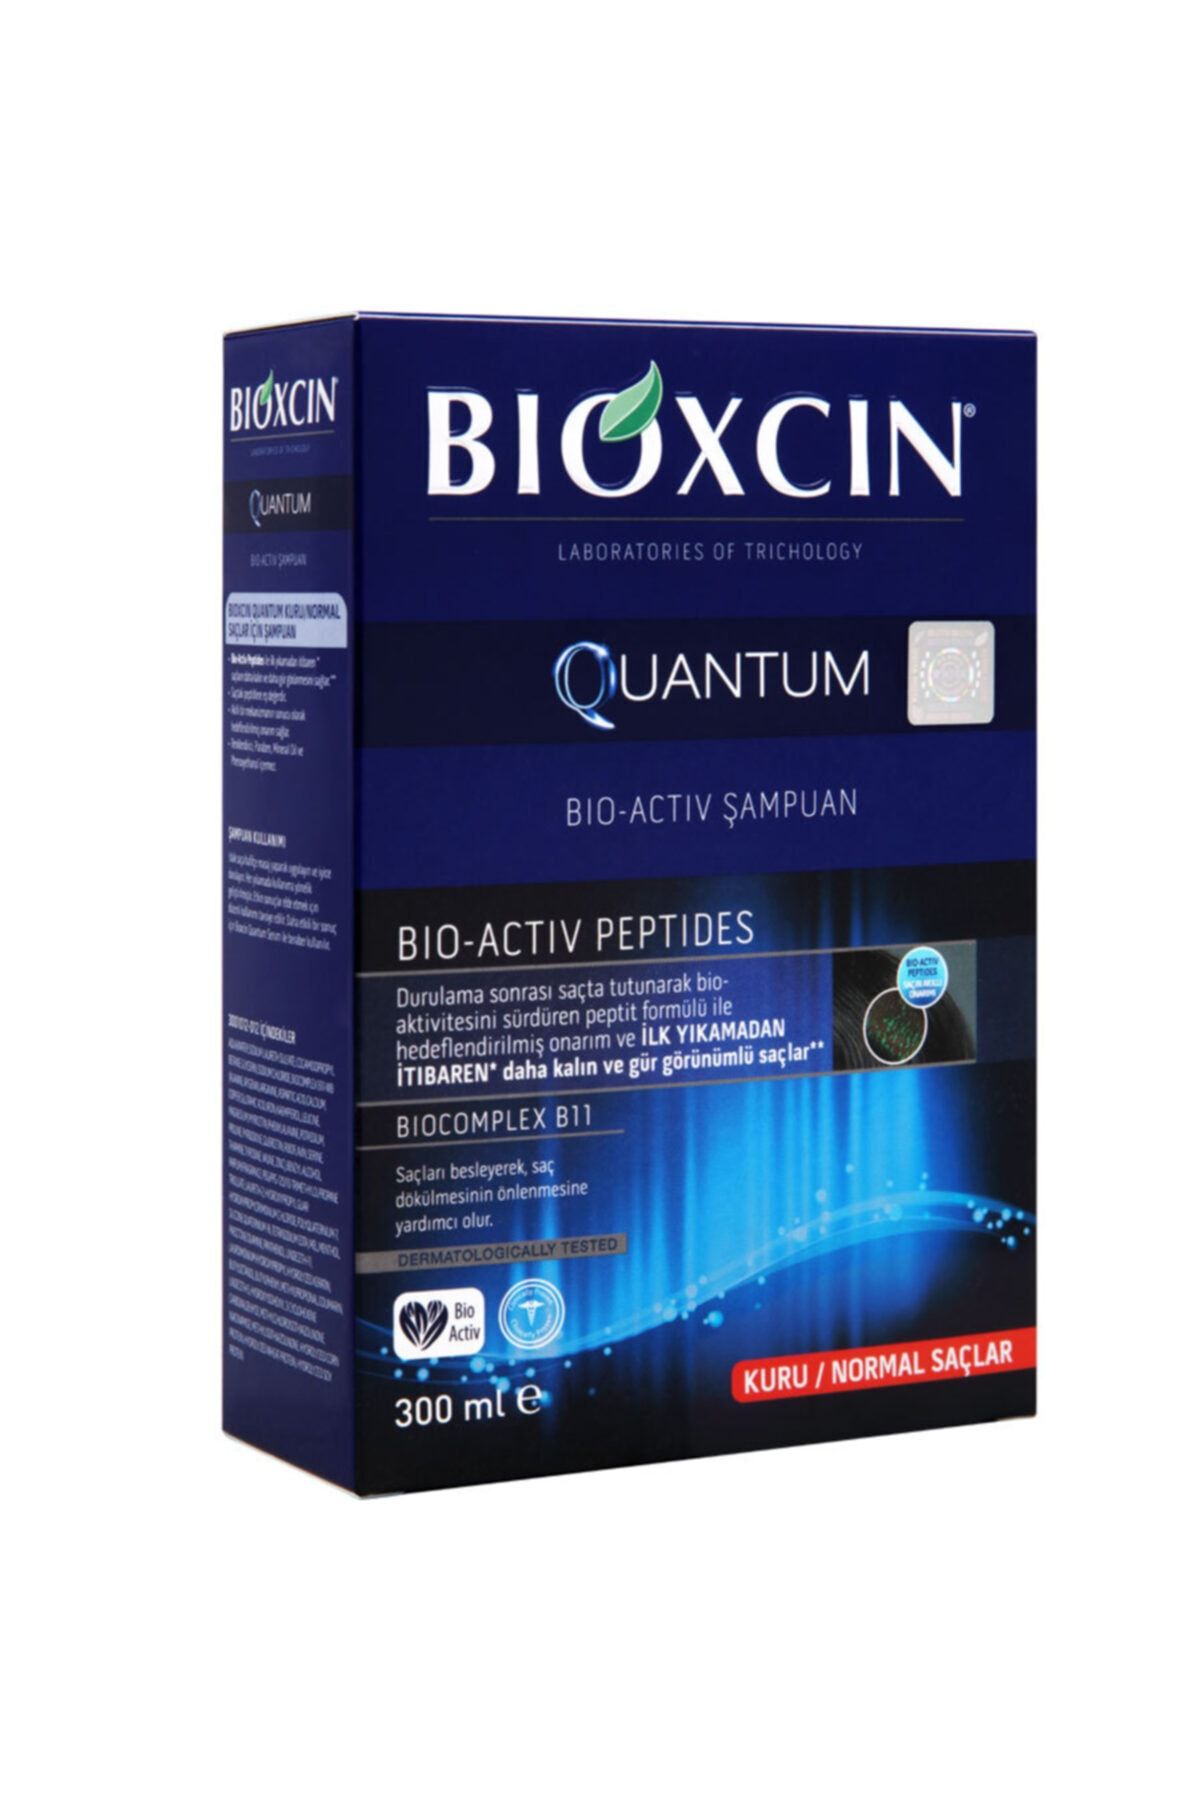 Bioxcin Quantum Kuru & Normal Saçlar Için Şampuan 300 Ml